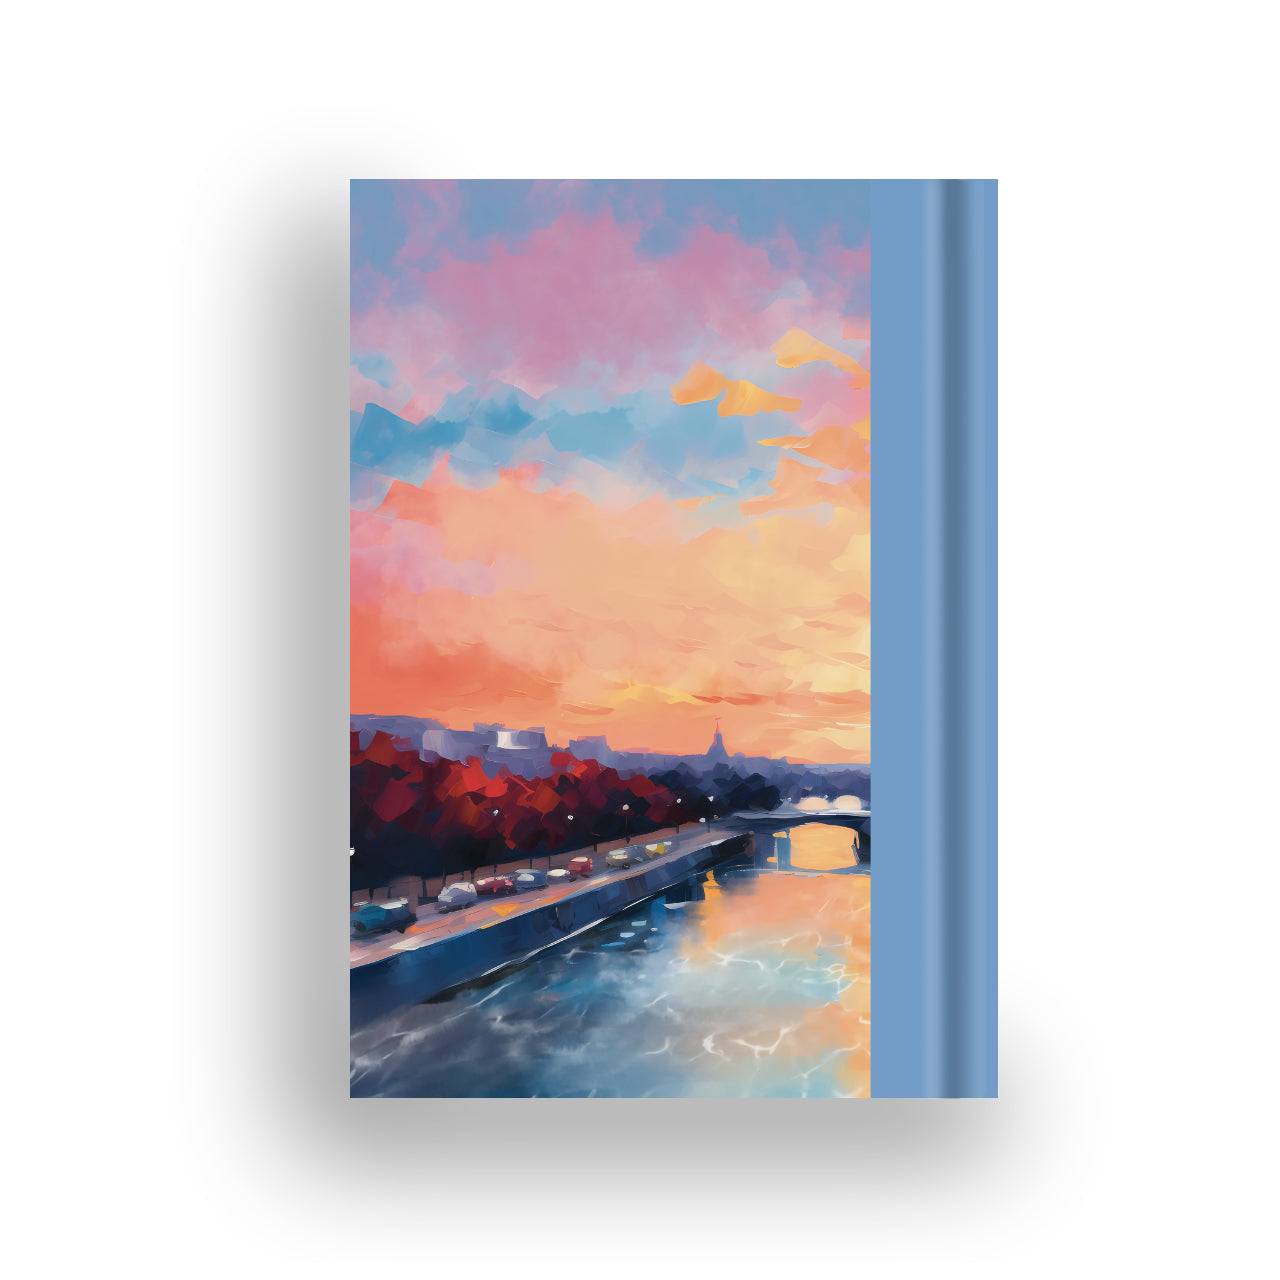 Seine - A5 Hardback Notebook